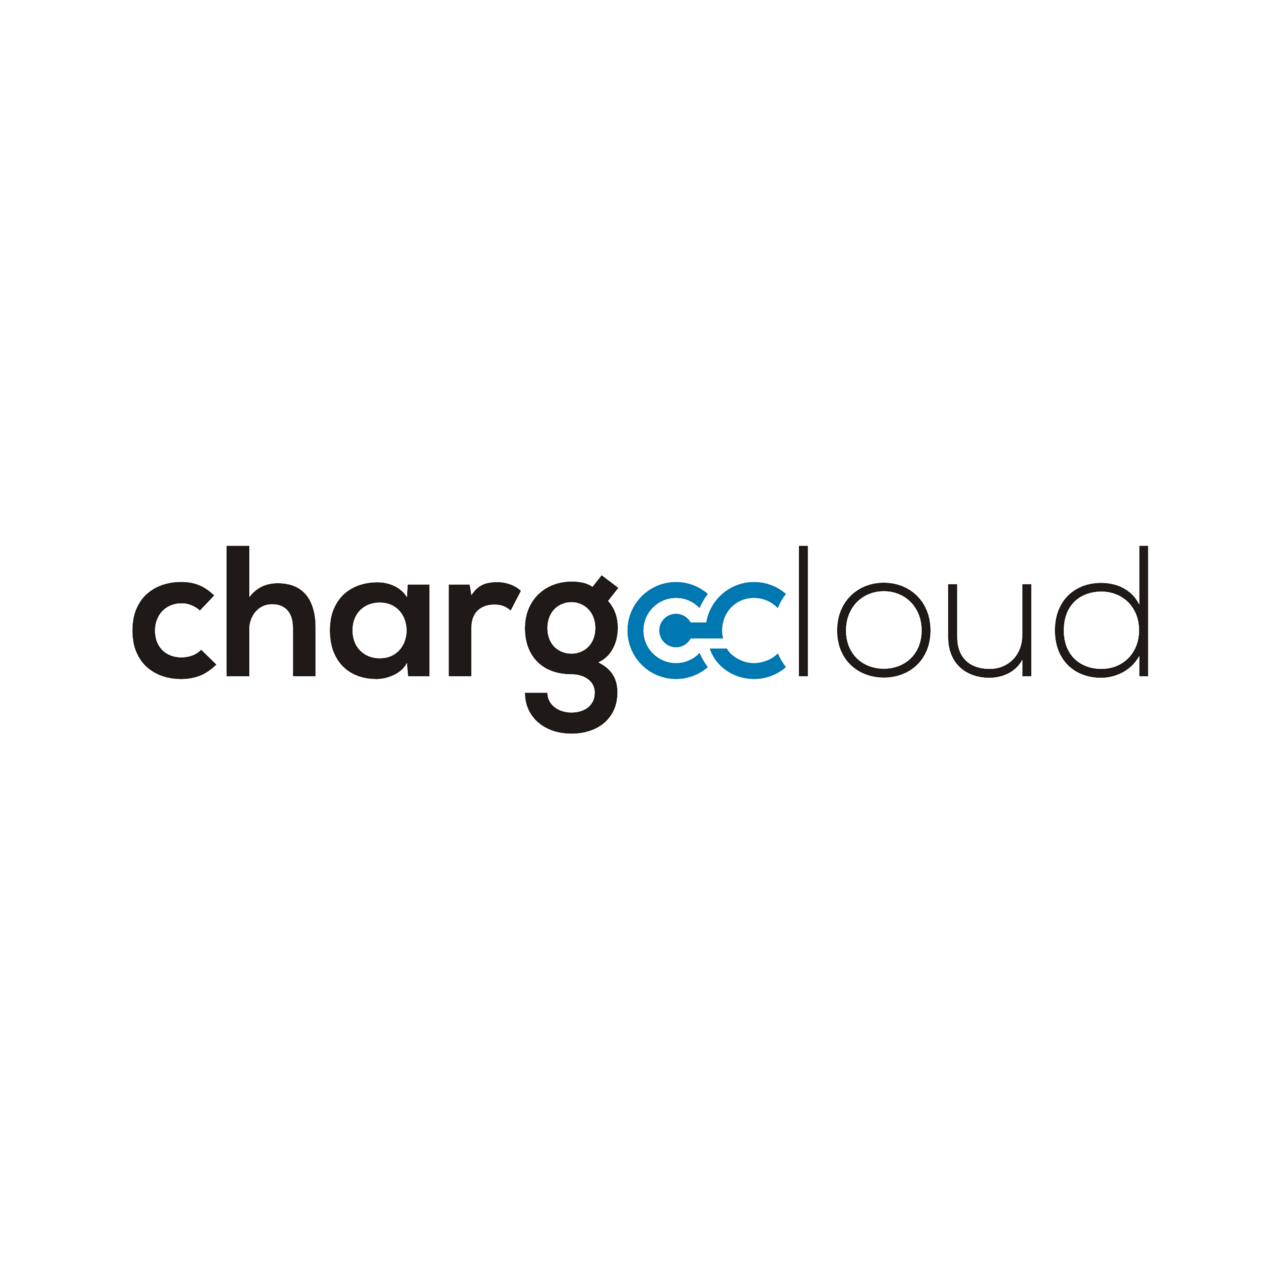 Chargecloud GmbH